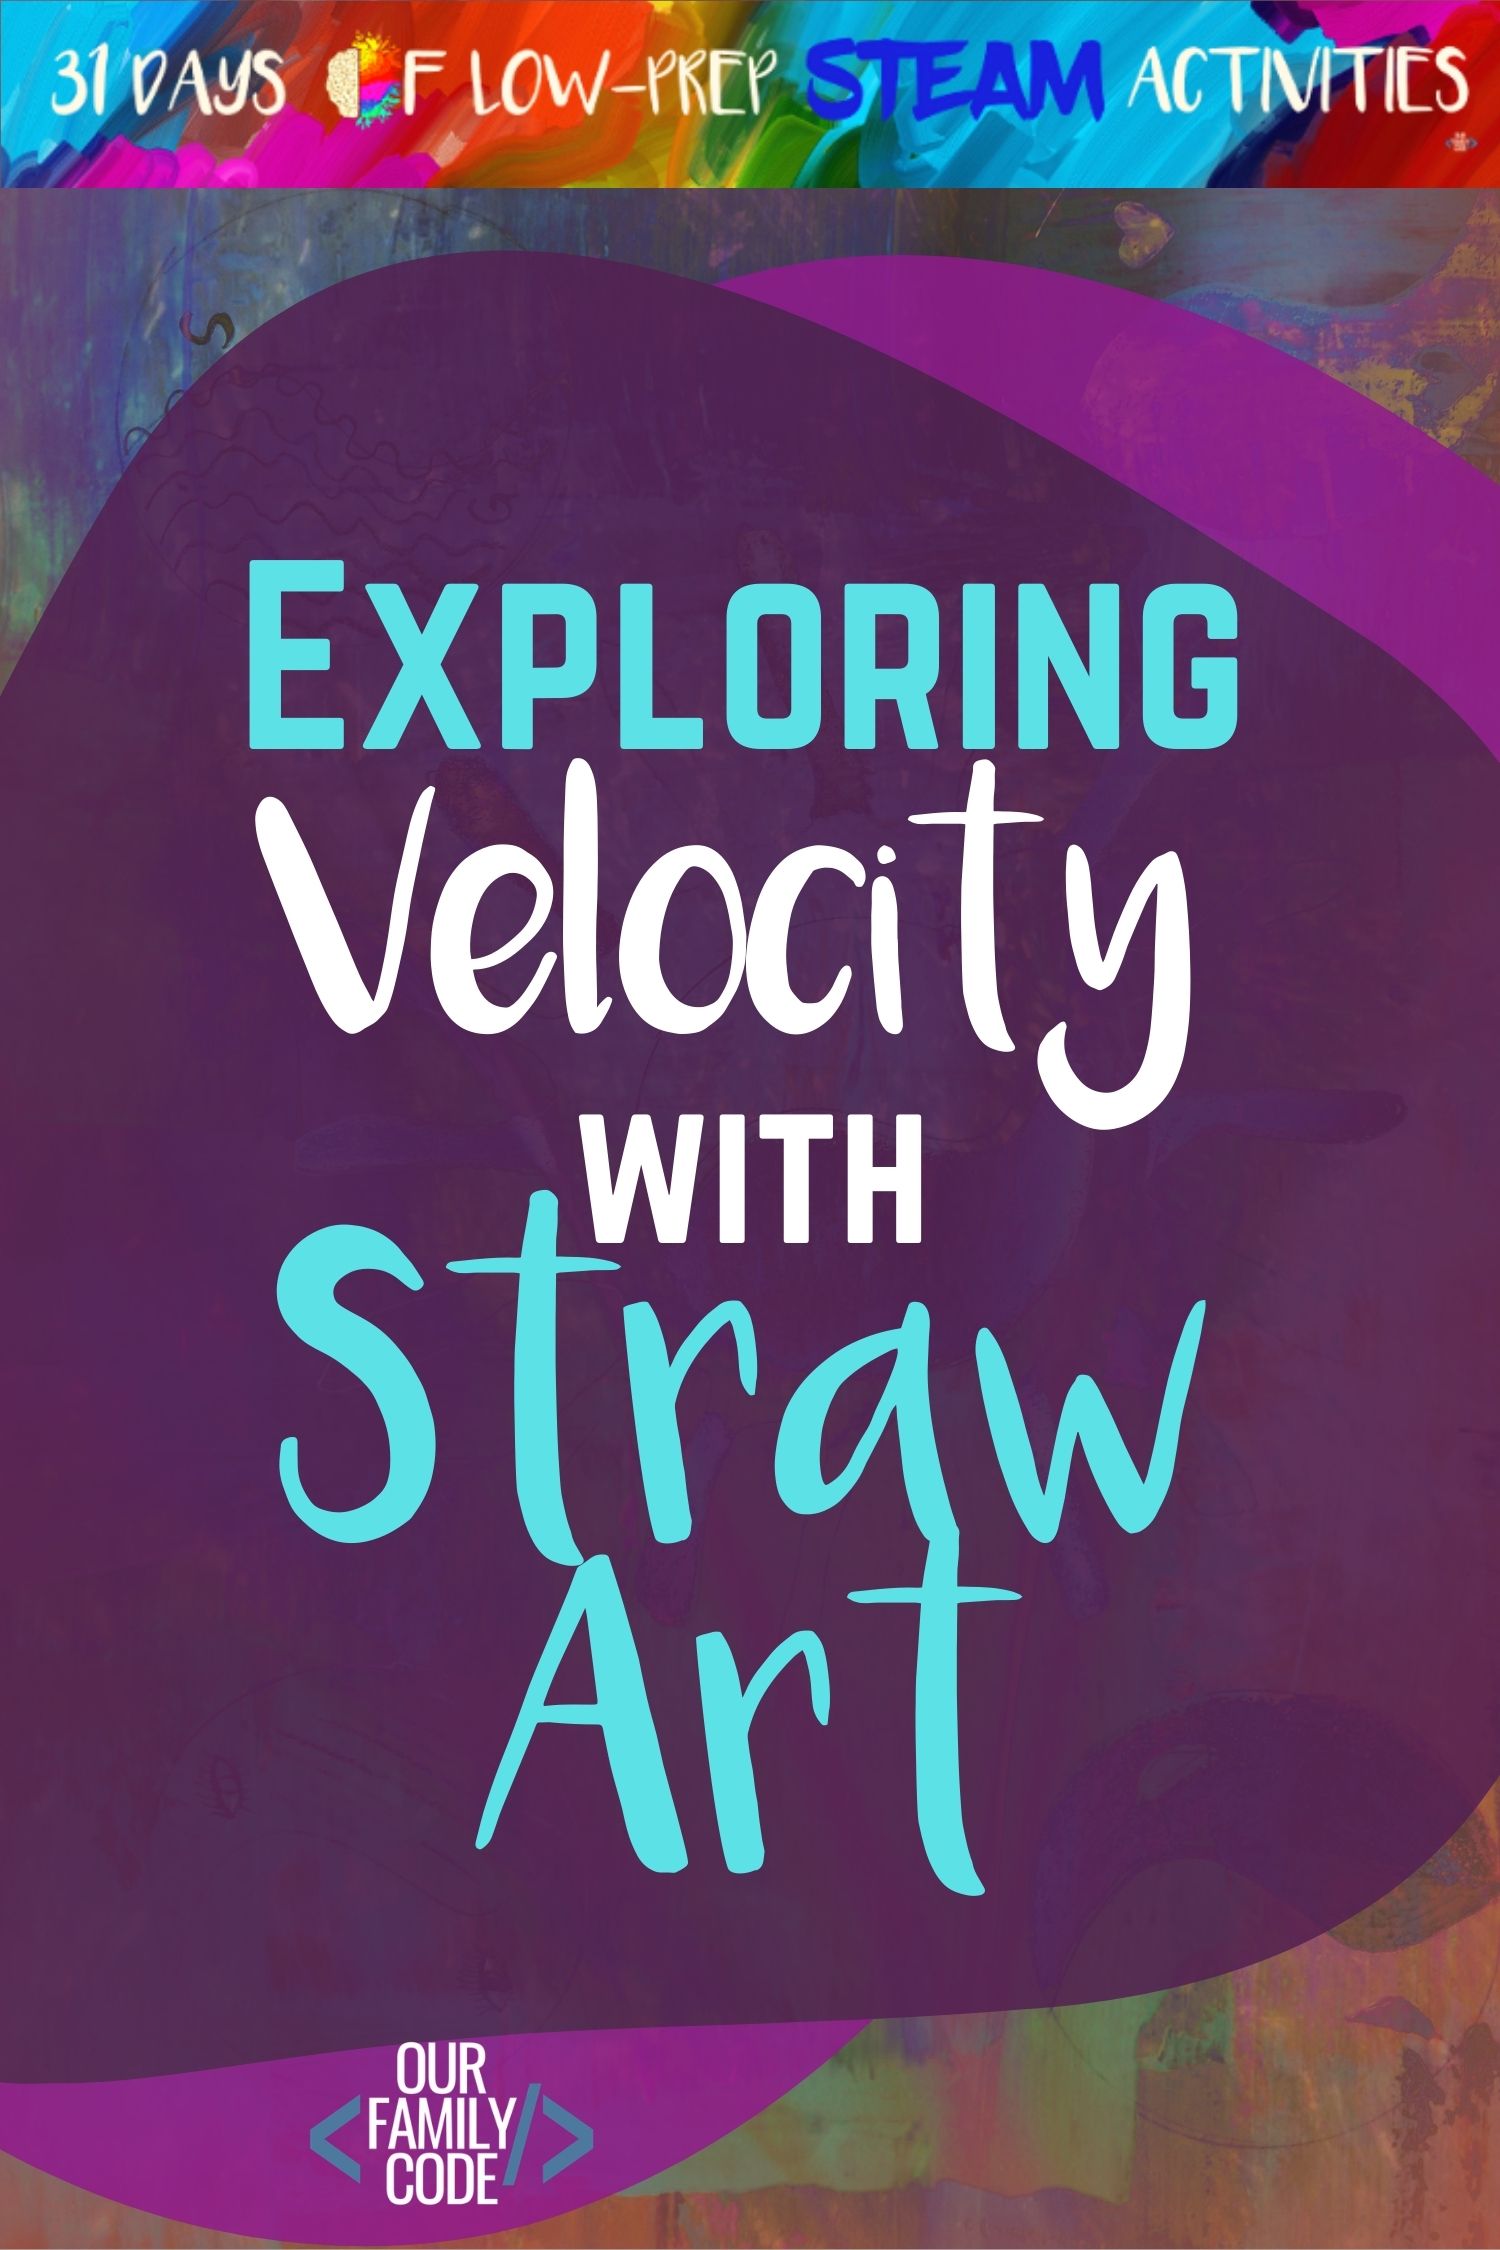 blow art with straws steam activity